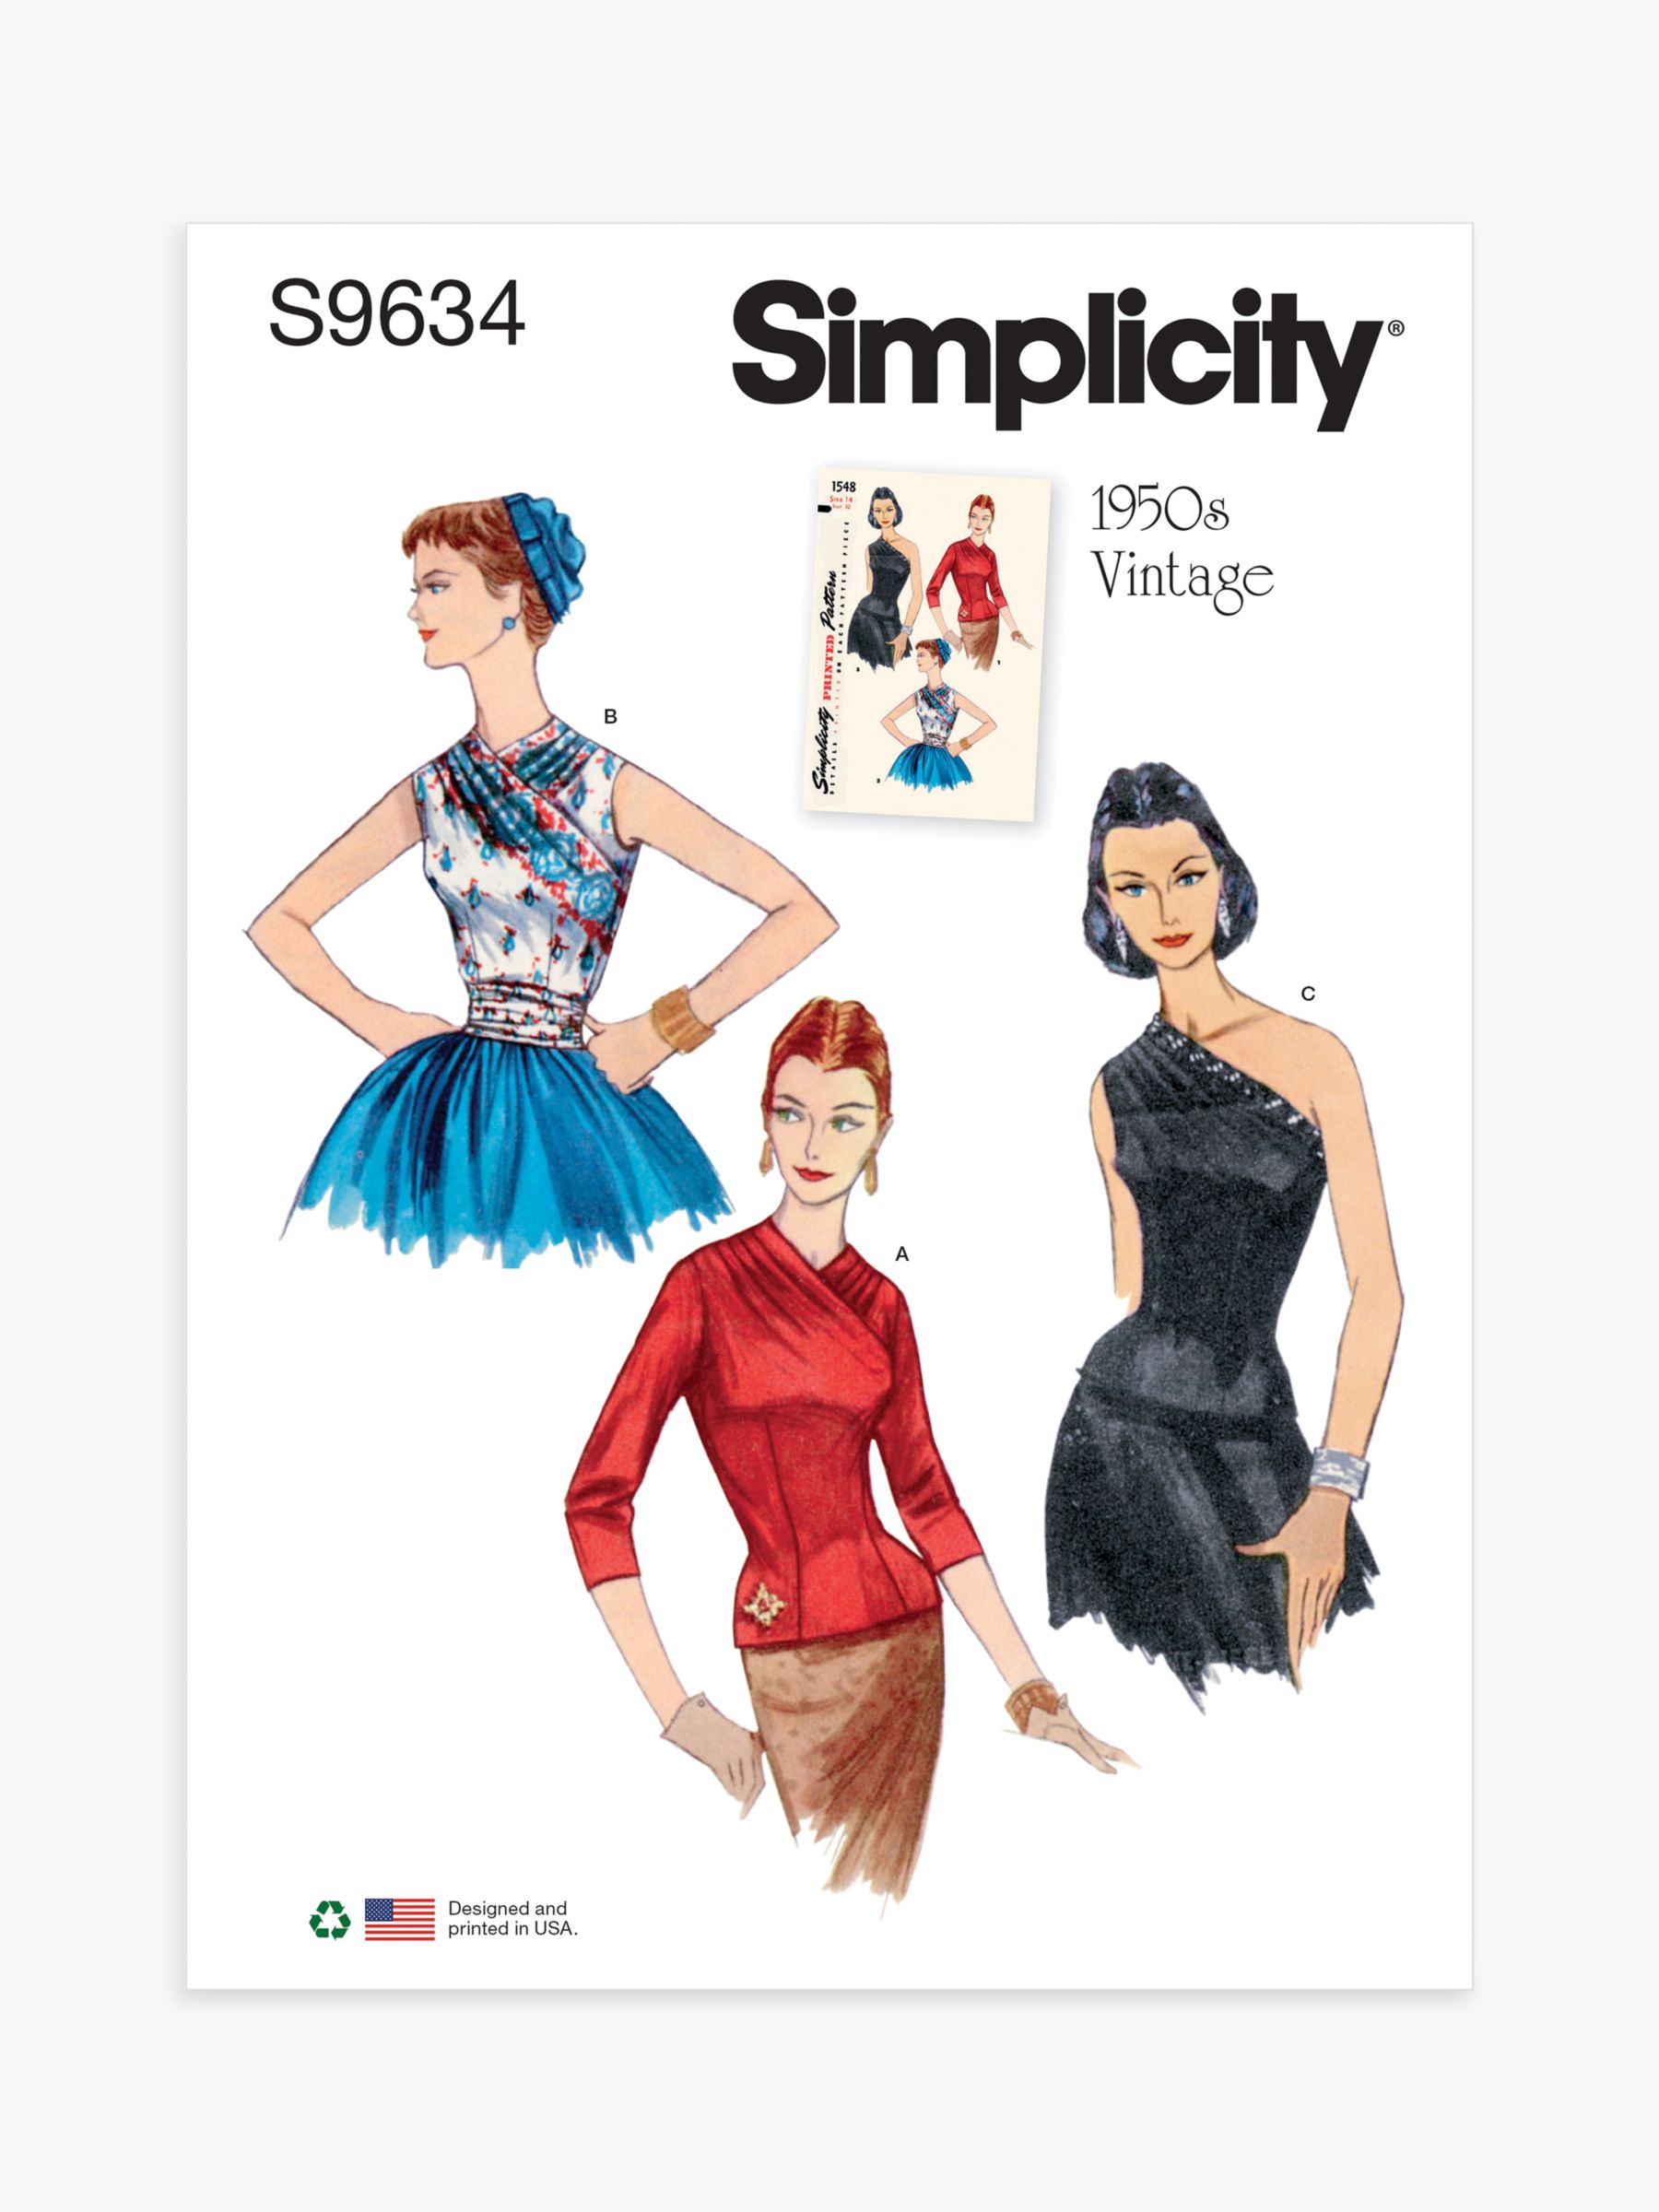 Simplicity Sewing Pattern 1461, Tunic Top Blouse, Women Plus Sizes